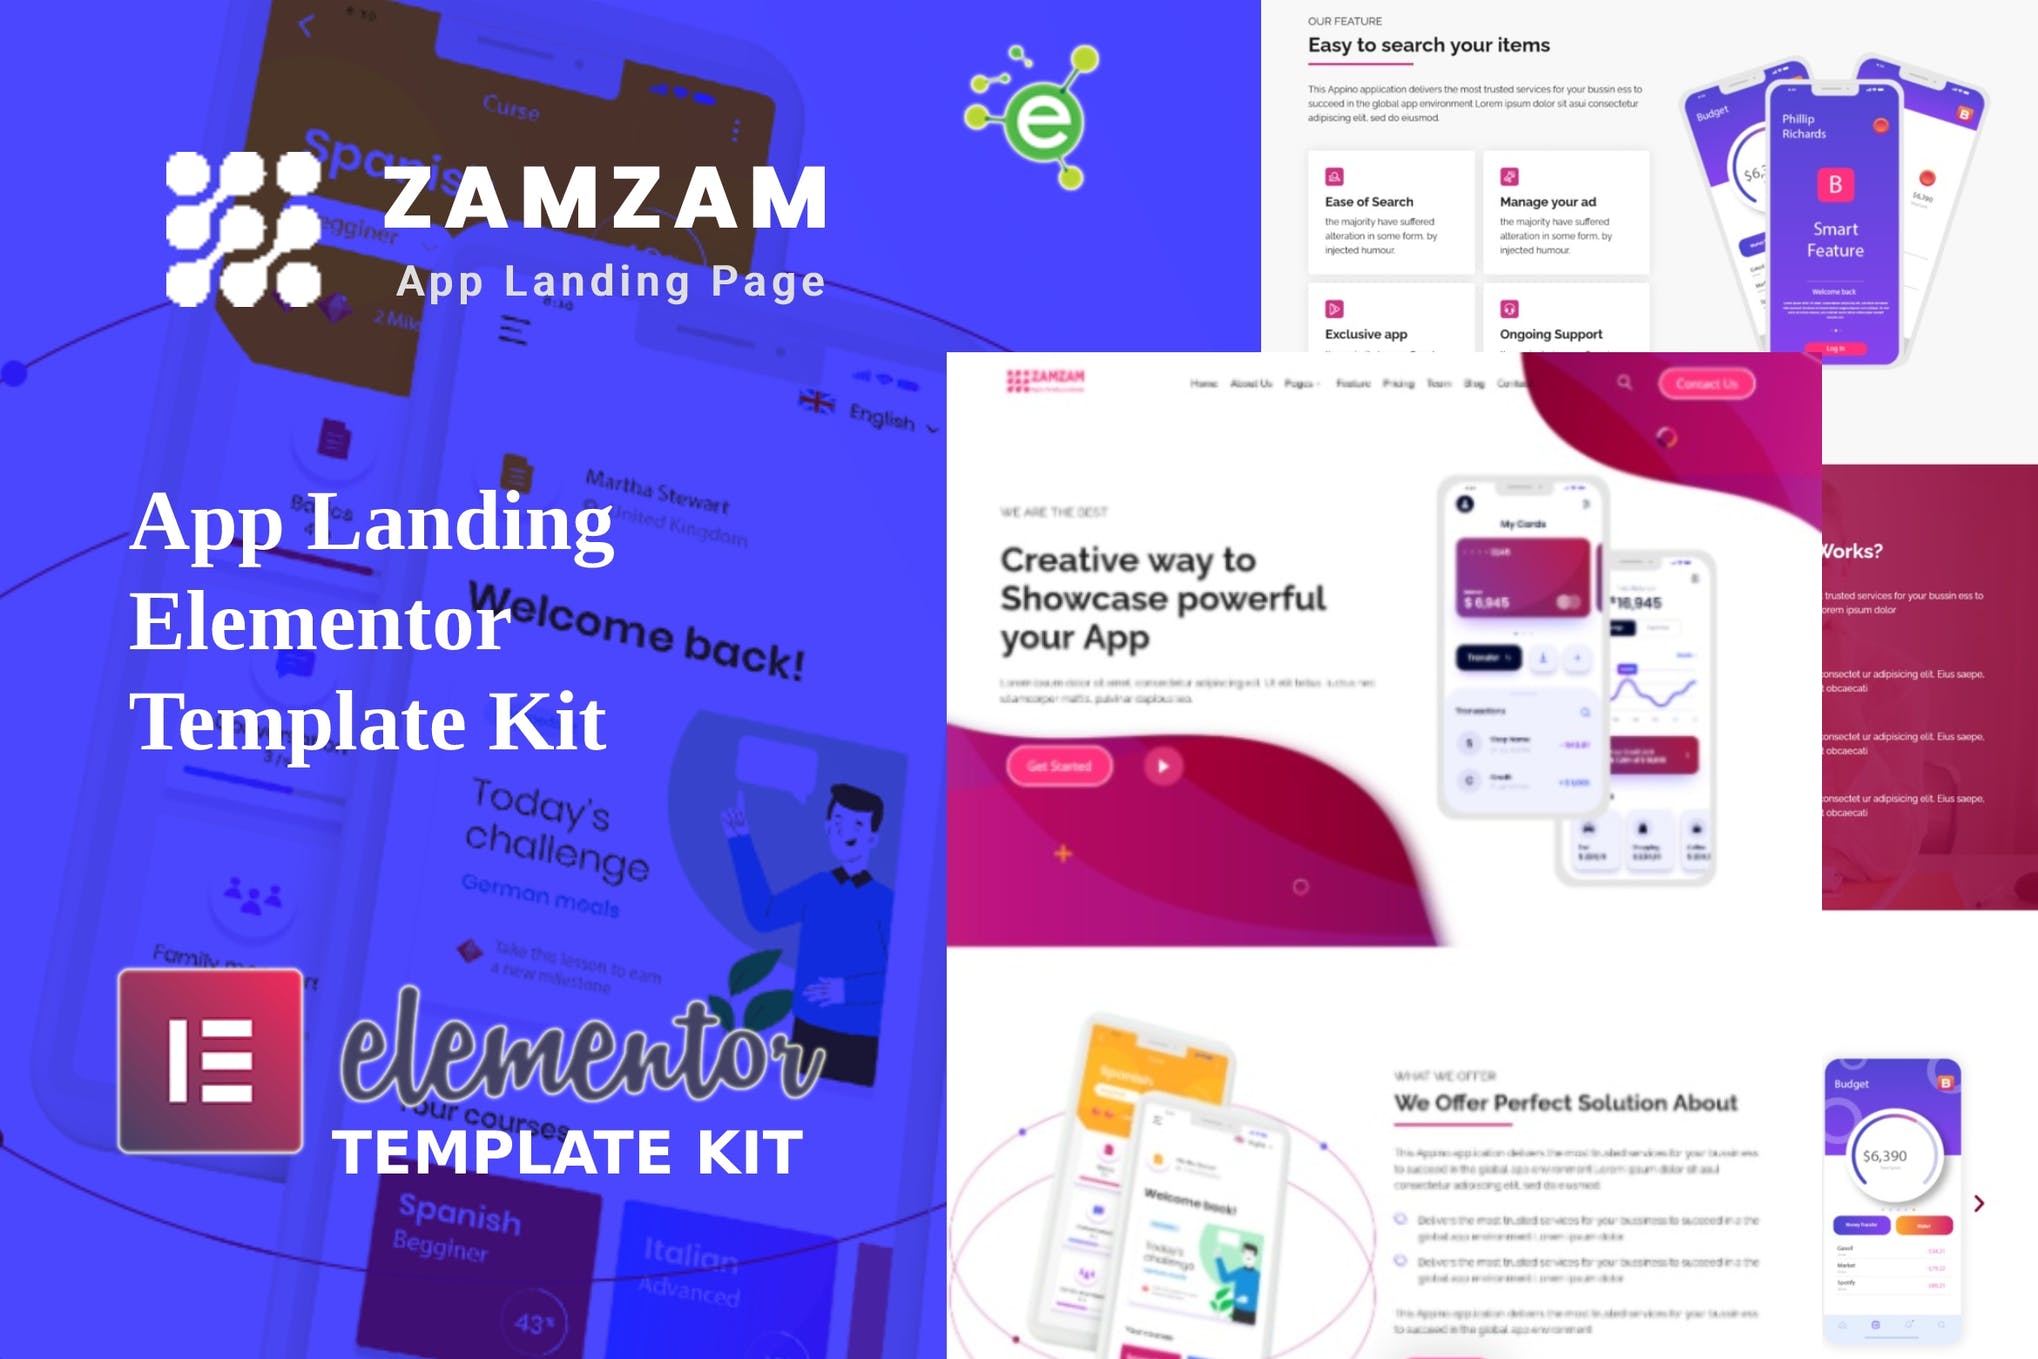 Zamzam - App Landing Elementor Template Kit